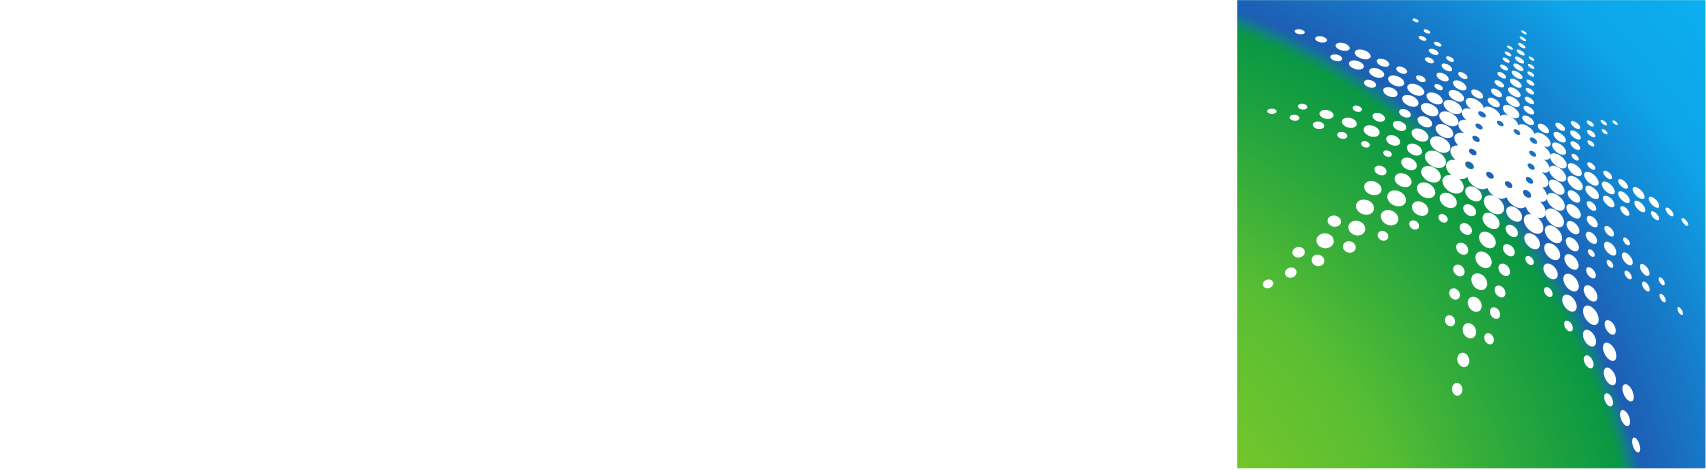 Saudi Aramco logo grand pour les fonds sombres (PNG transparent)